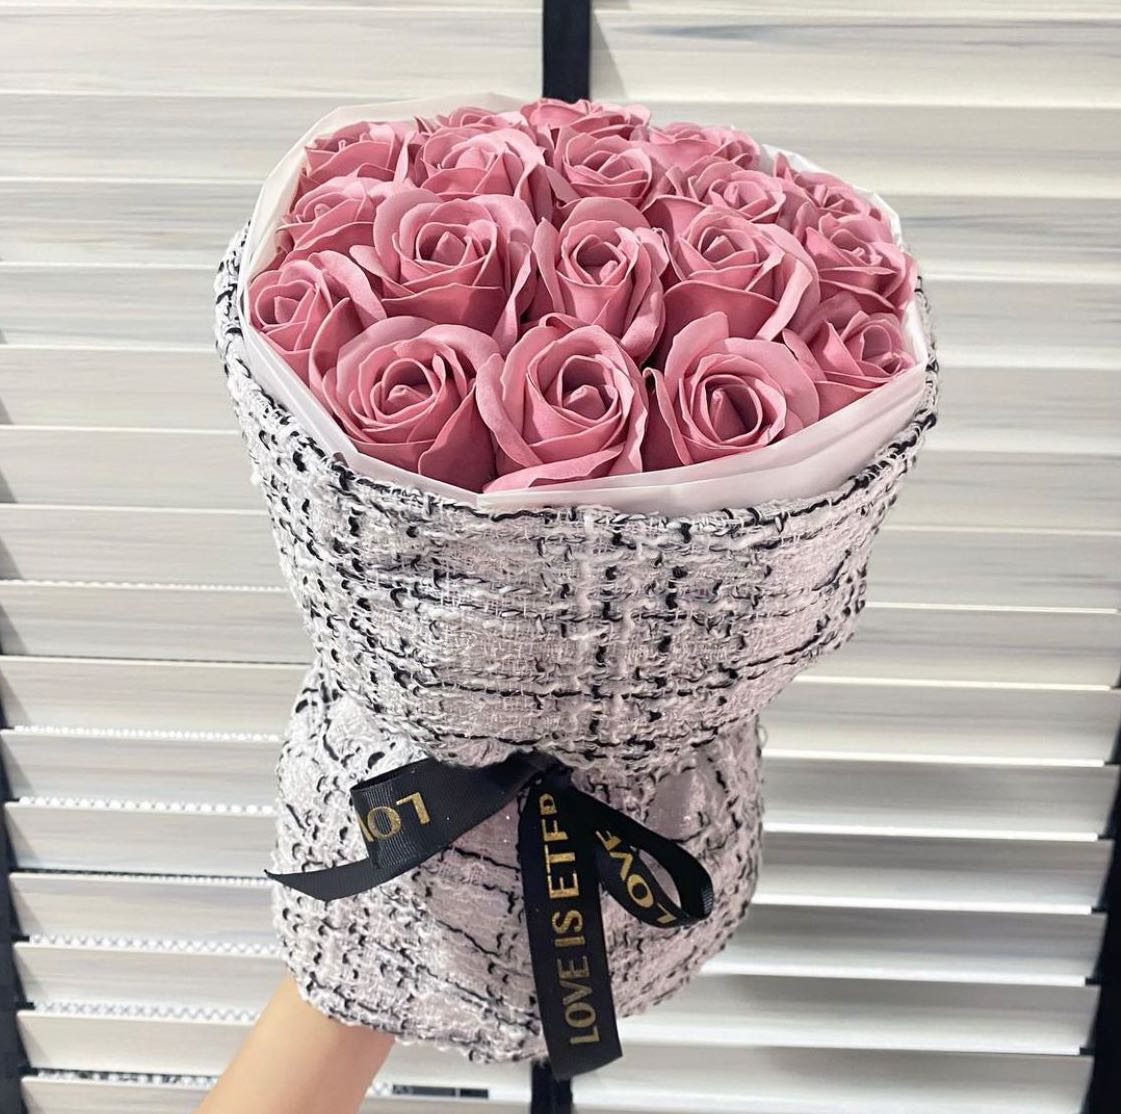 Small fragrant bouquet/Chanel bouquet/Chanel rose/lasting bouquet